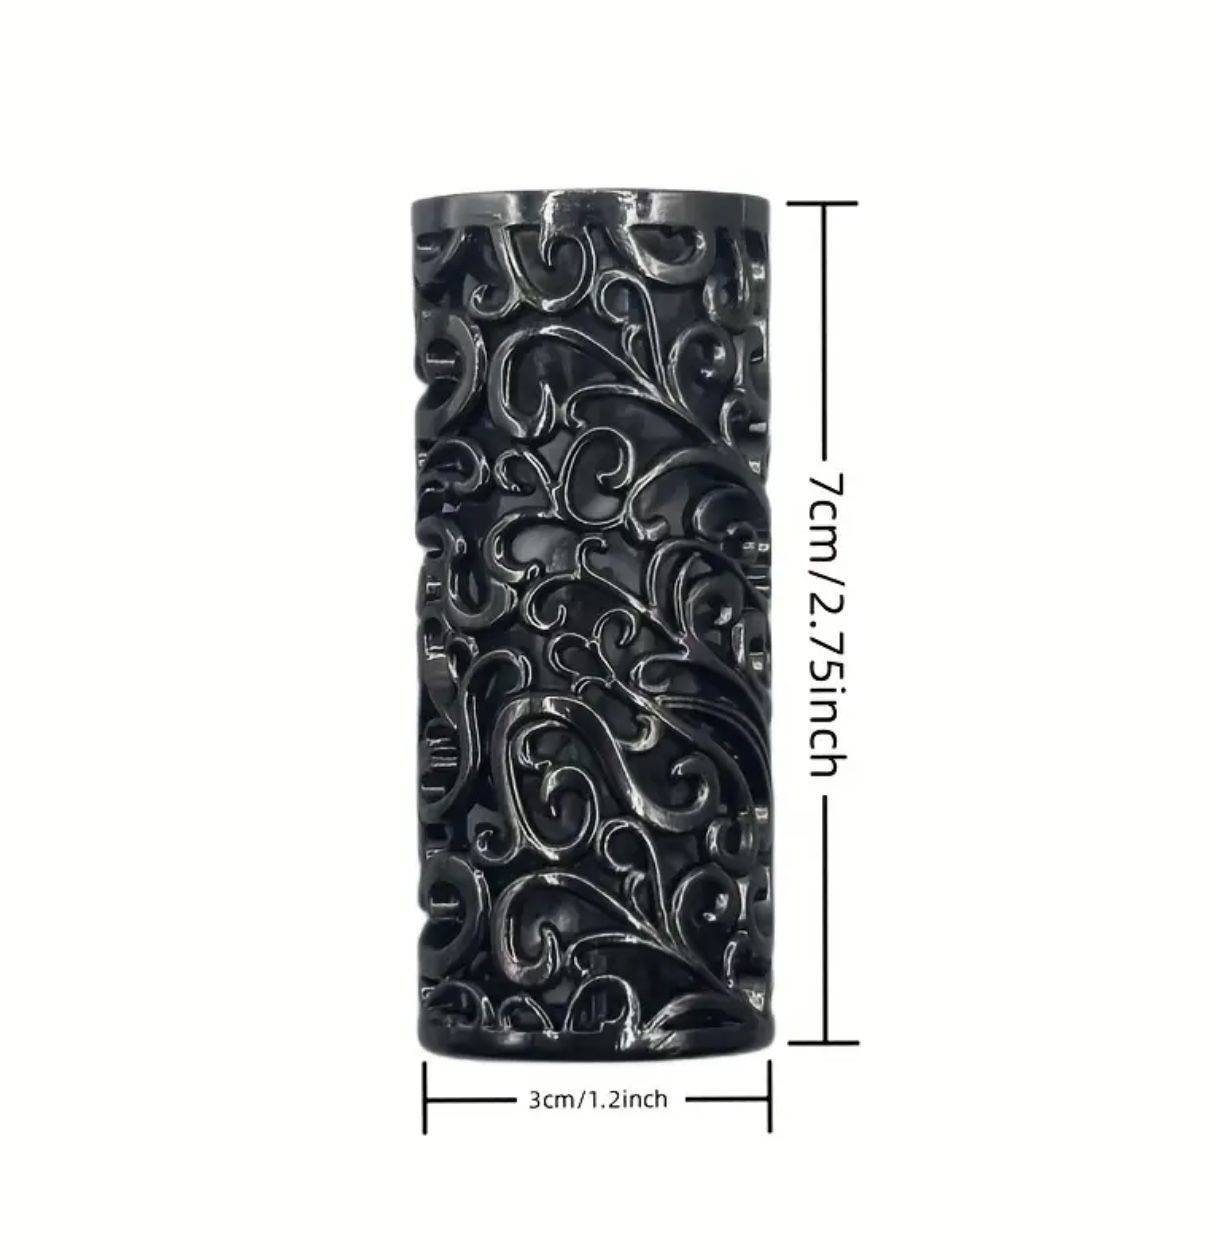 Bic lighter metal cover case